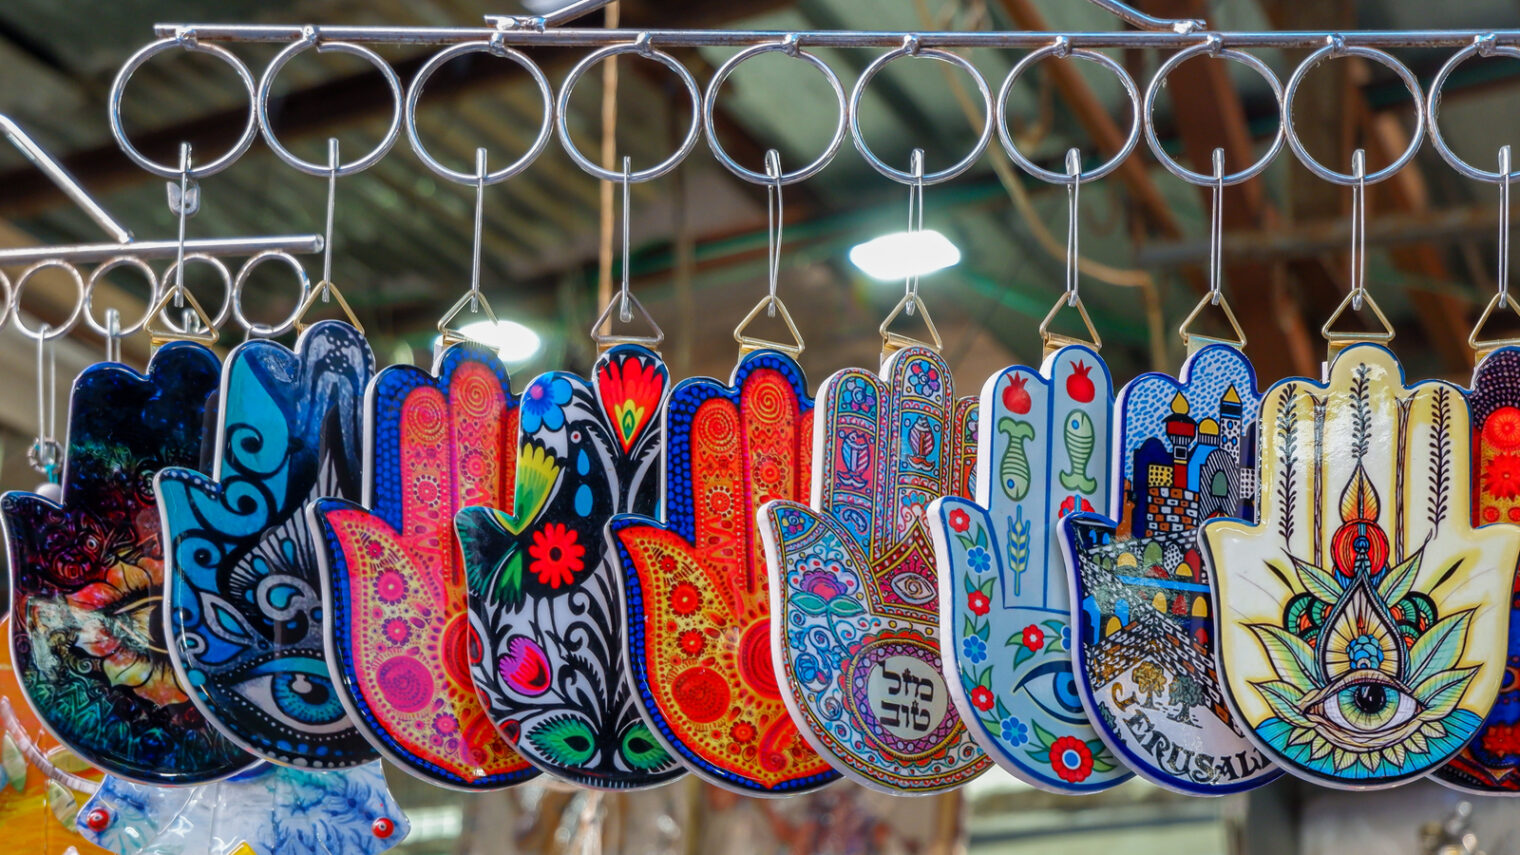 Hamsa souvenirs for sale in Tel Aviv. Photo via Shutterstock